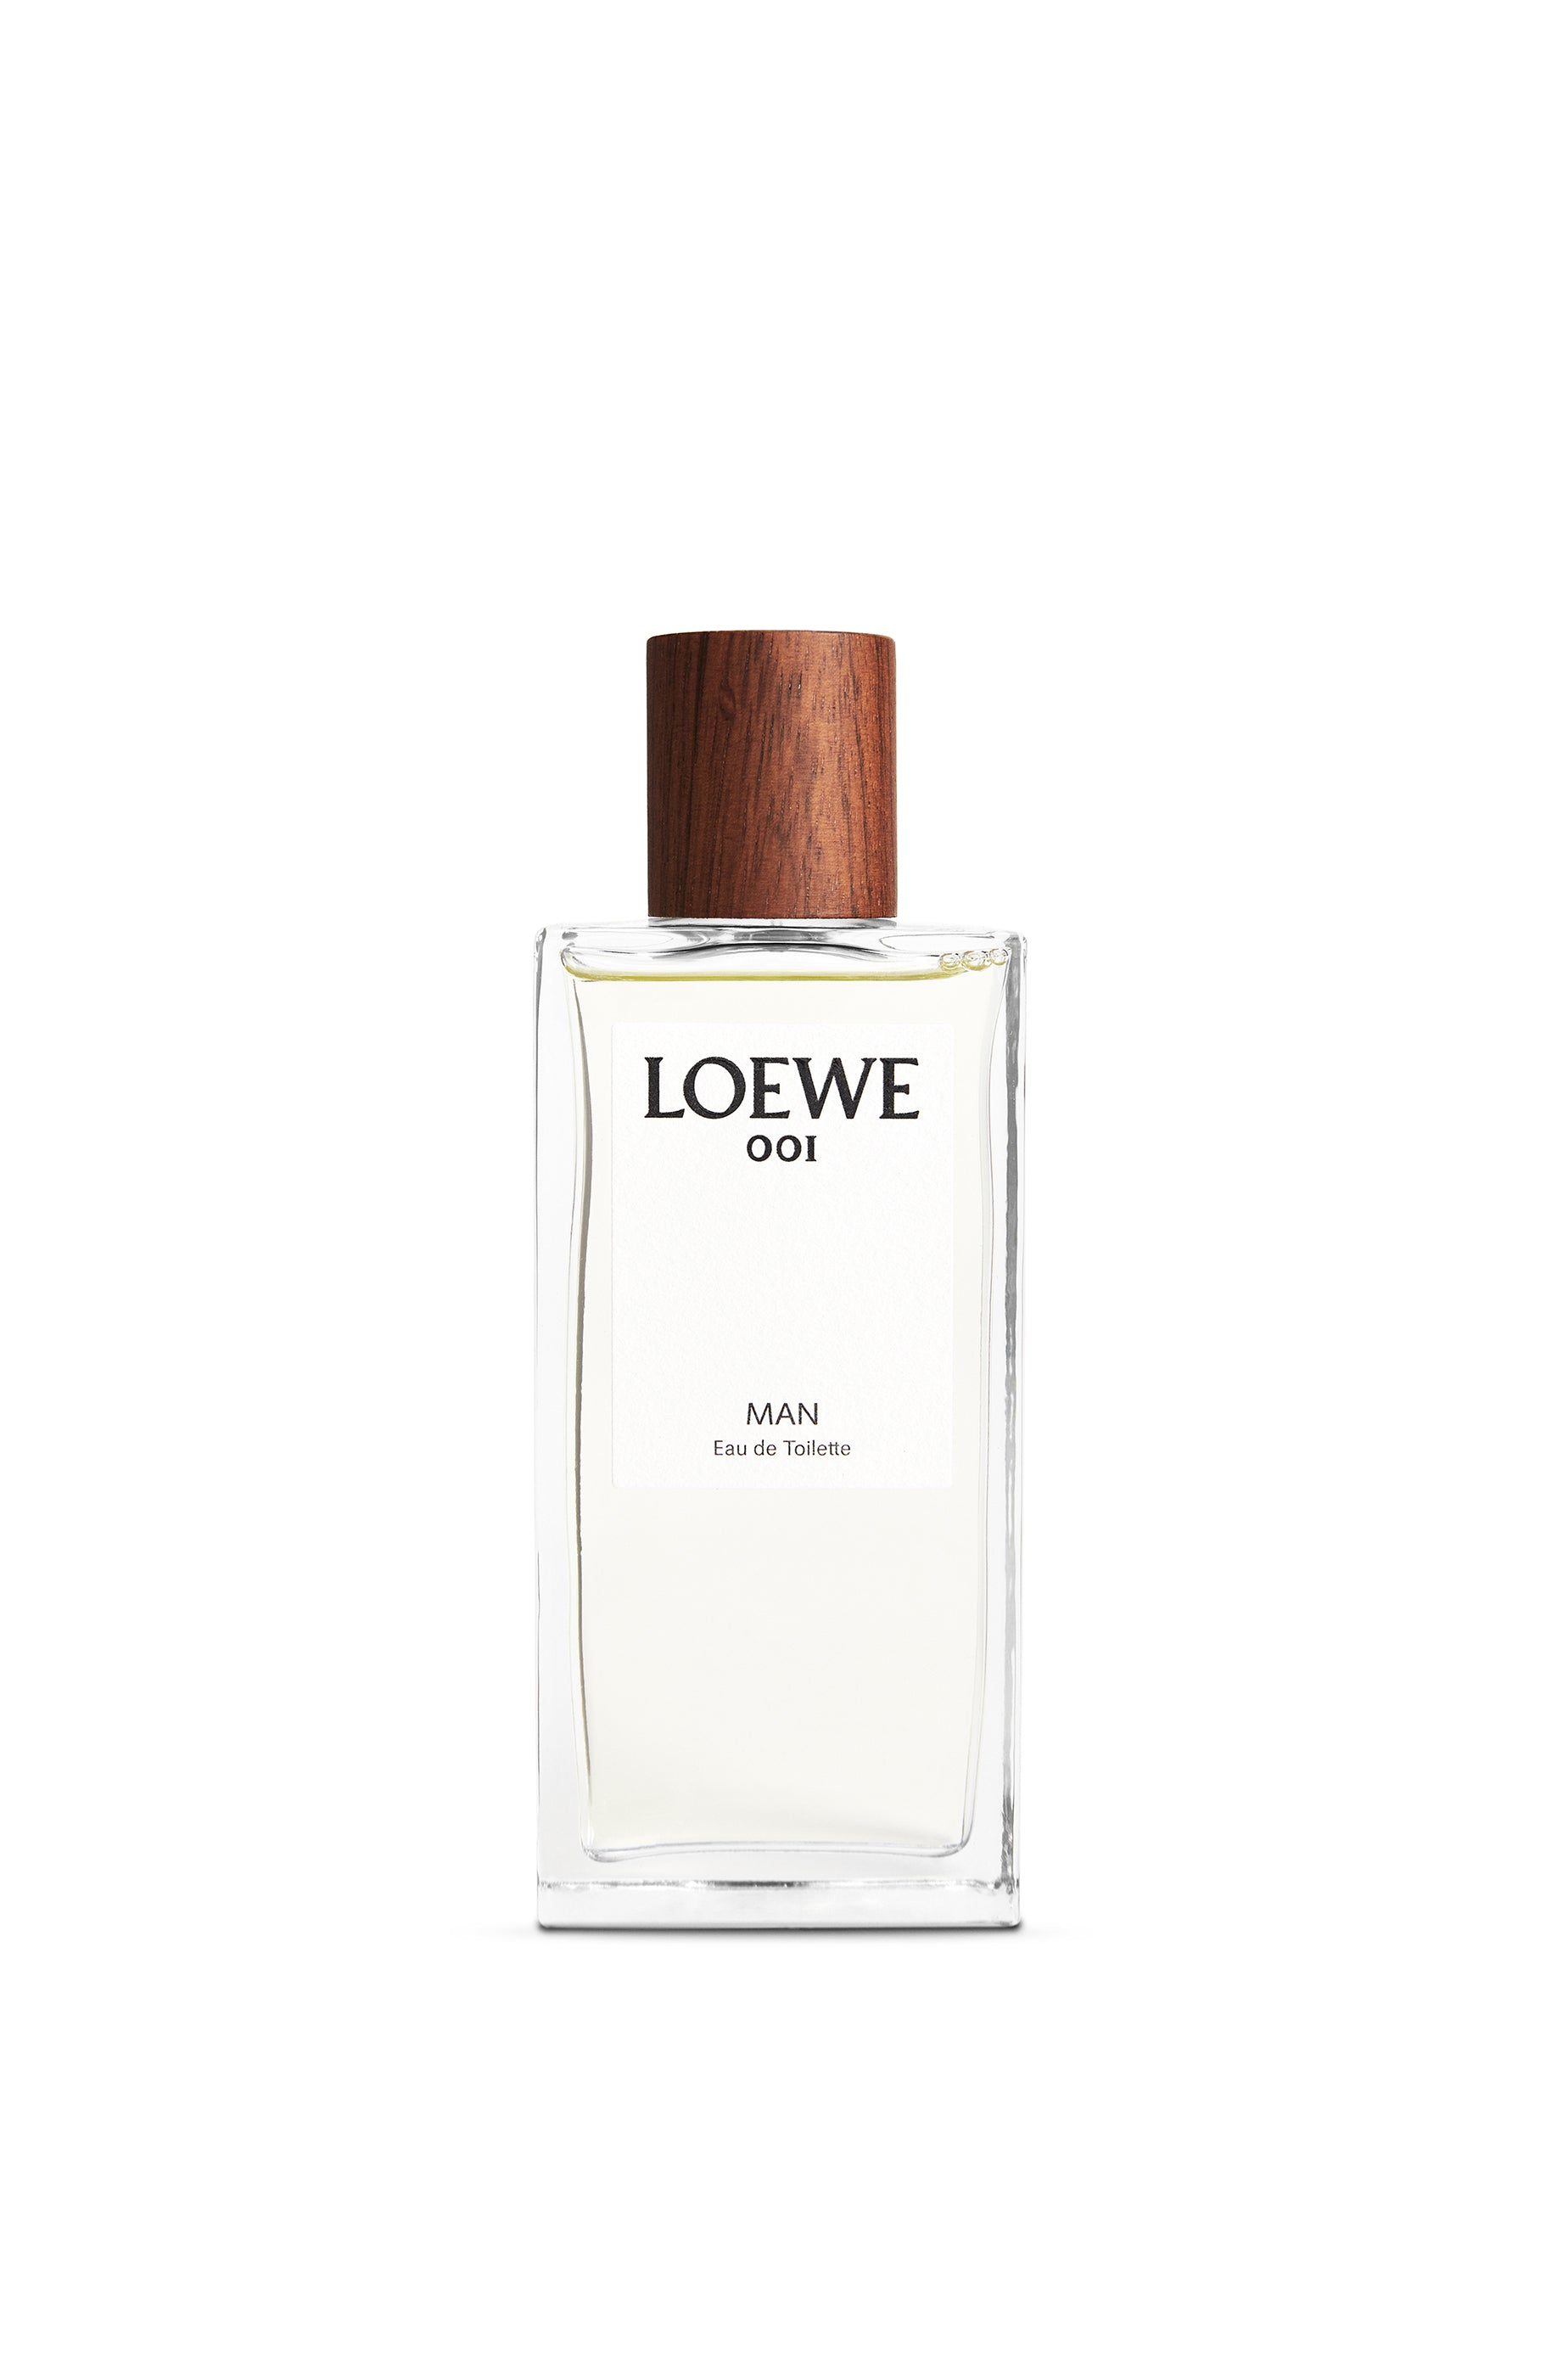 Photos - Women's Fragrance Loewe 001 Man Eau de Toilette 100ml, & 75ml Spray - Peacock Bazaar - 75ml 